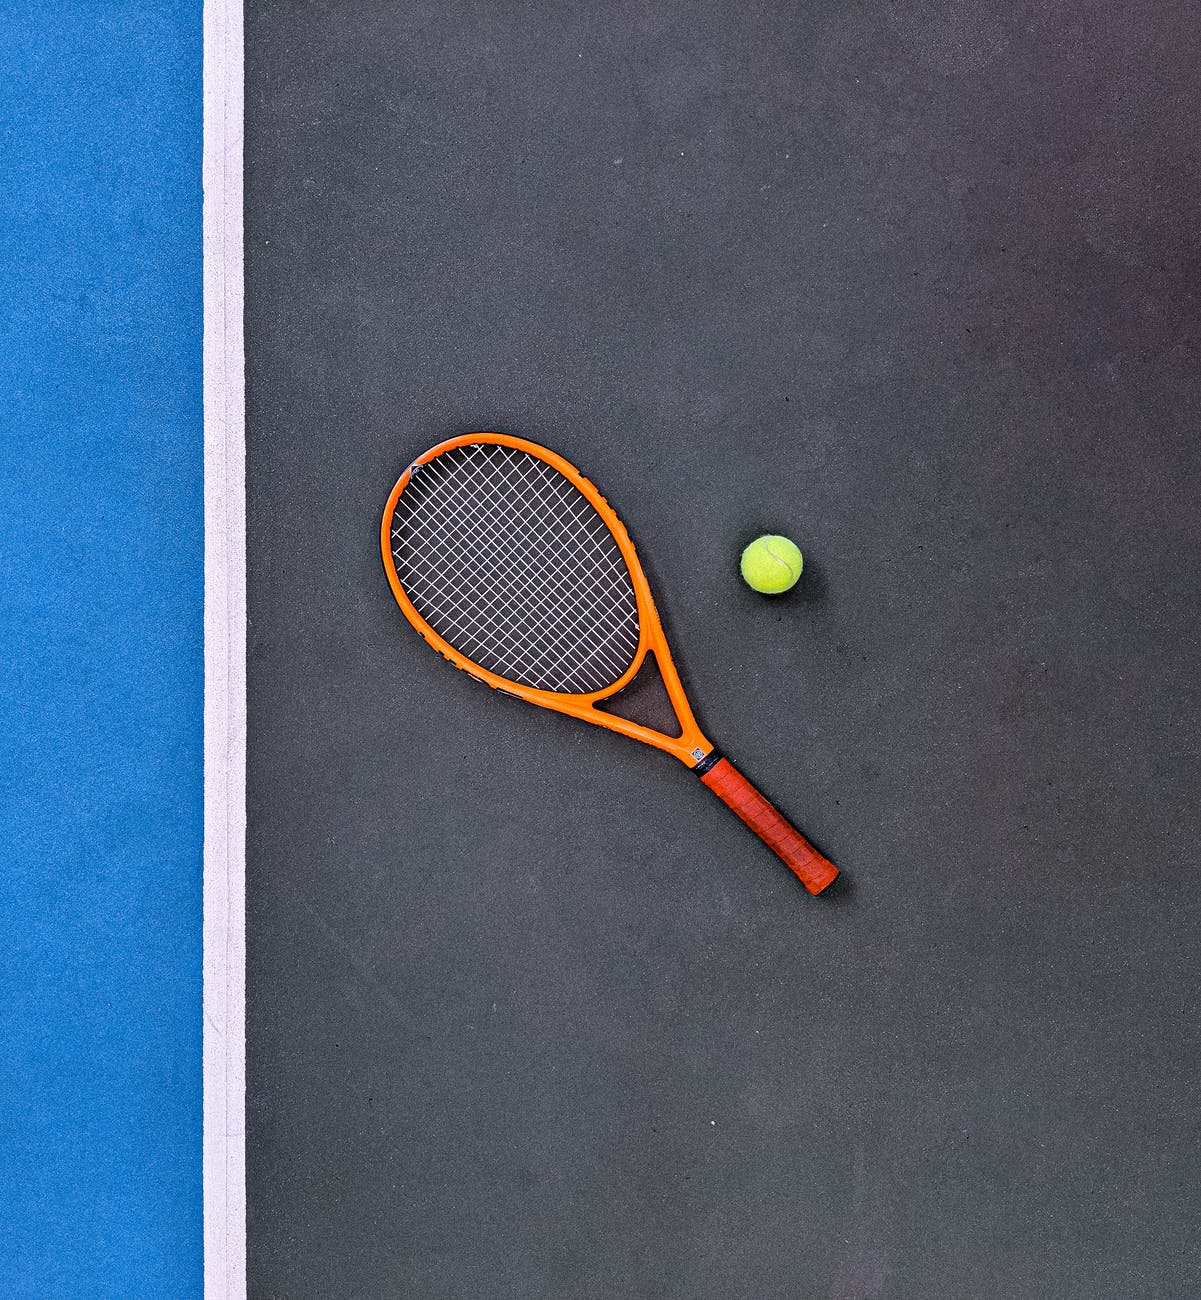 orange tennis racket beside green tennis ball